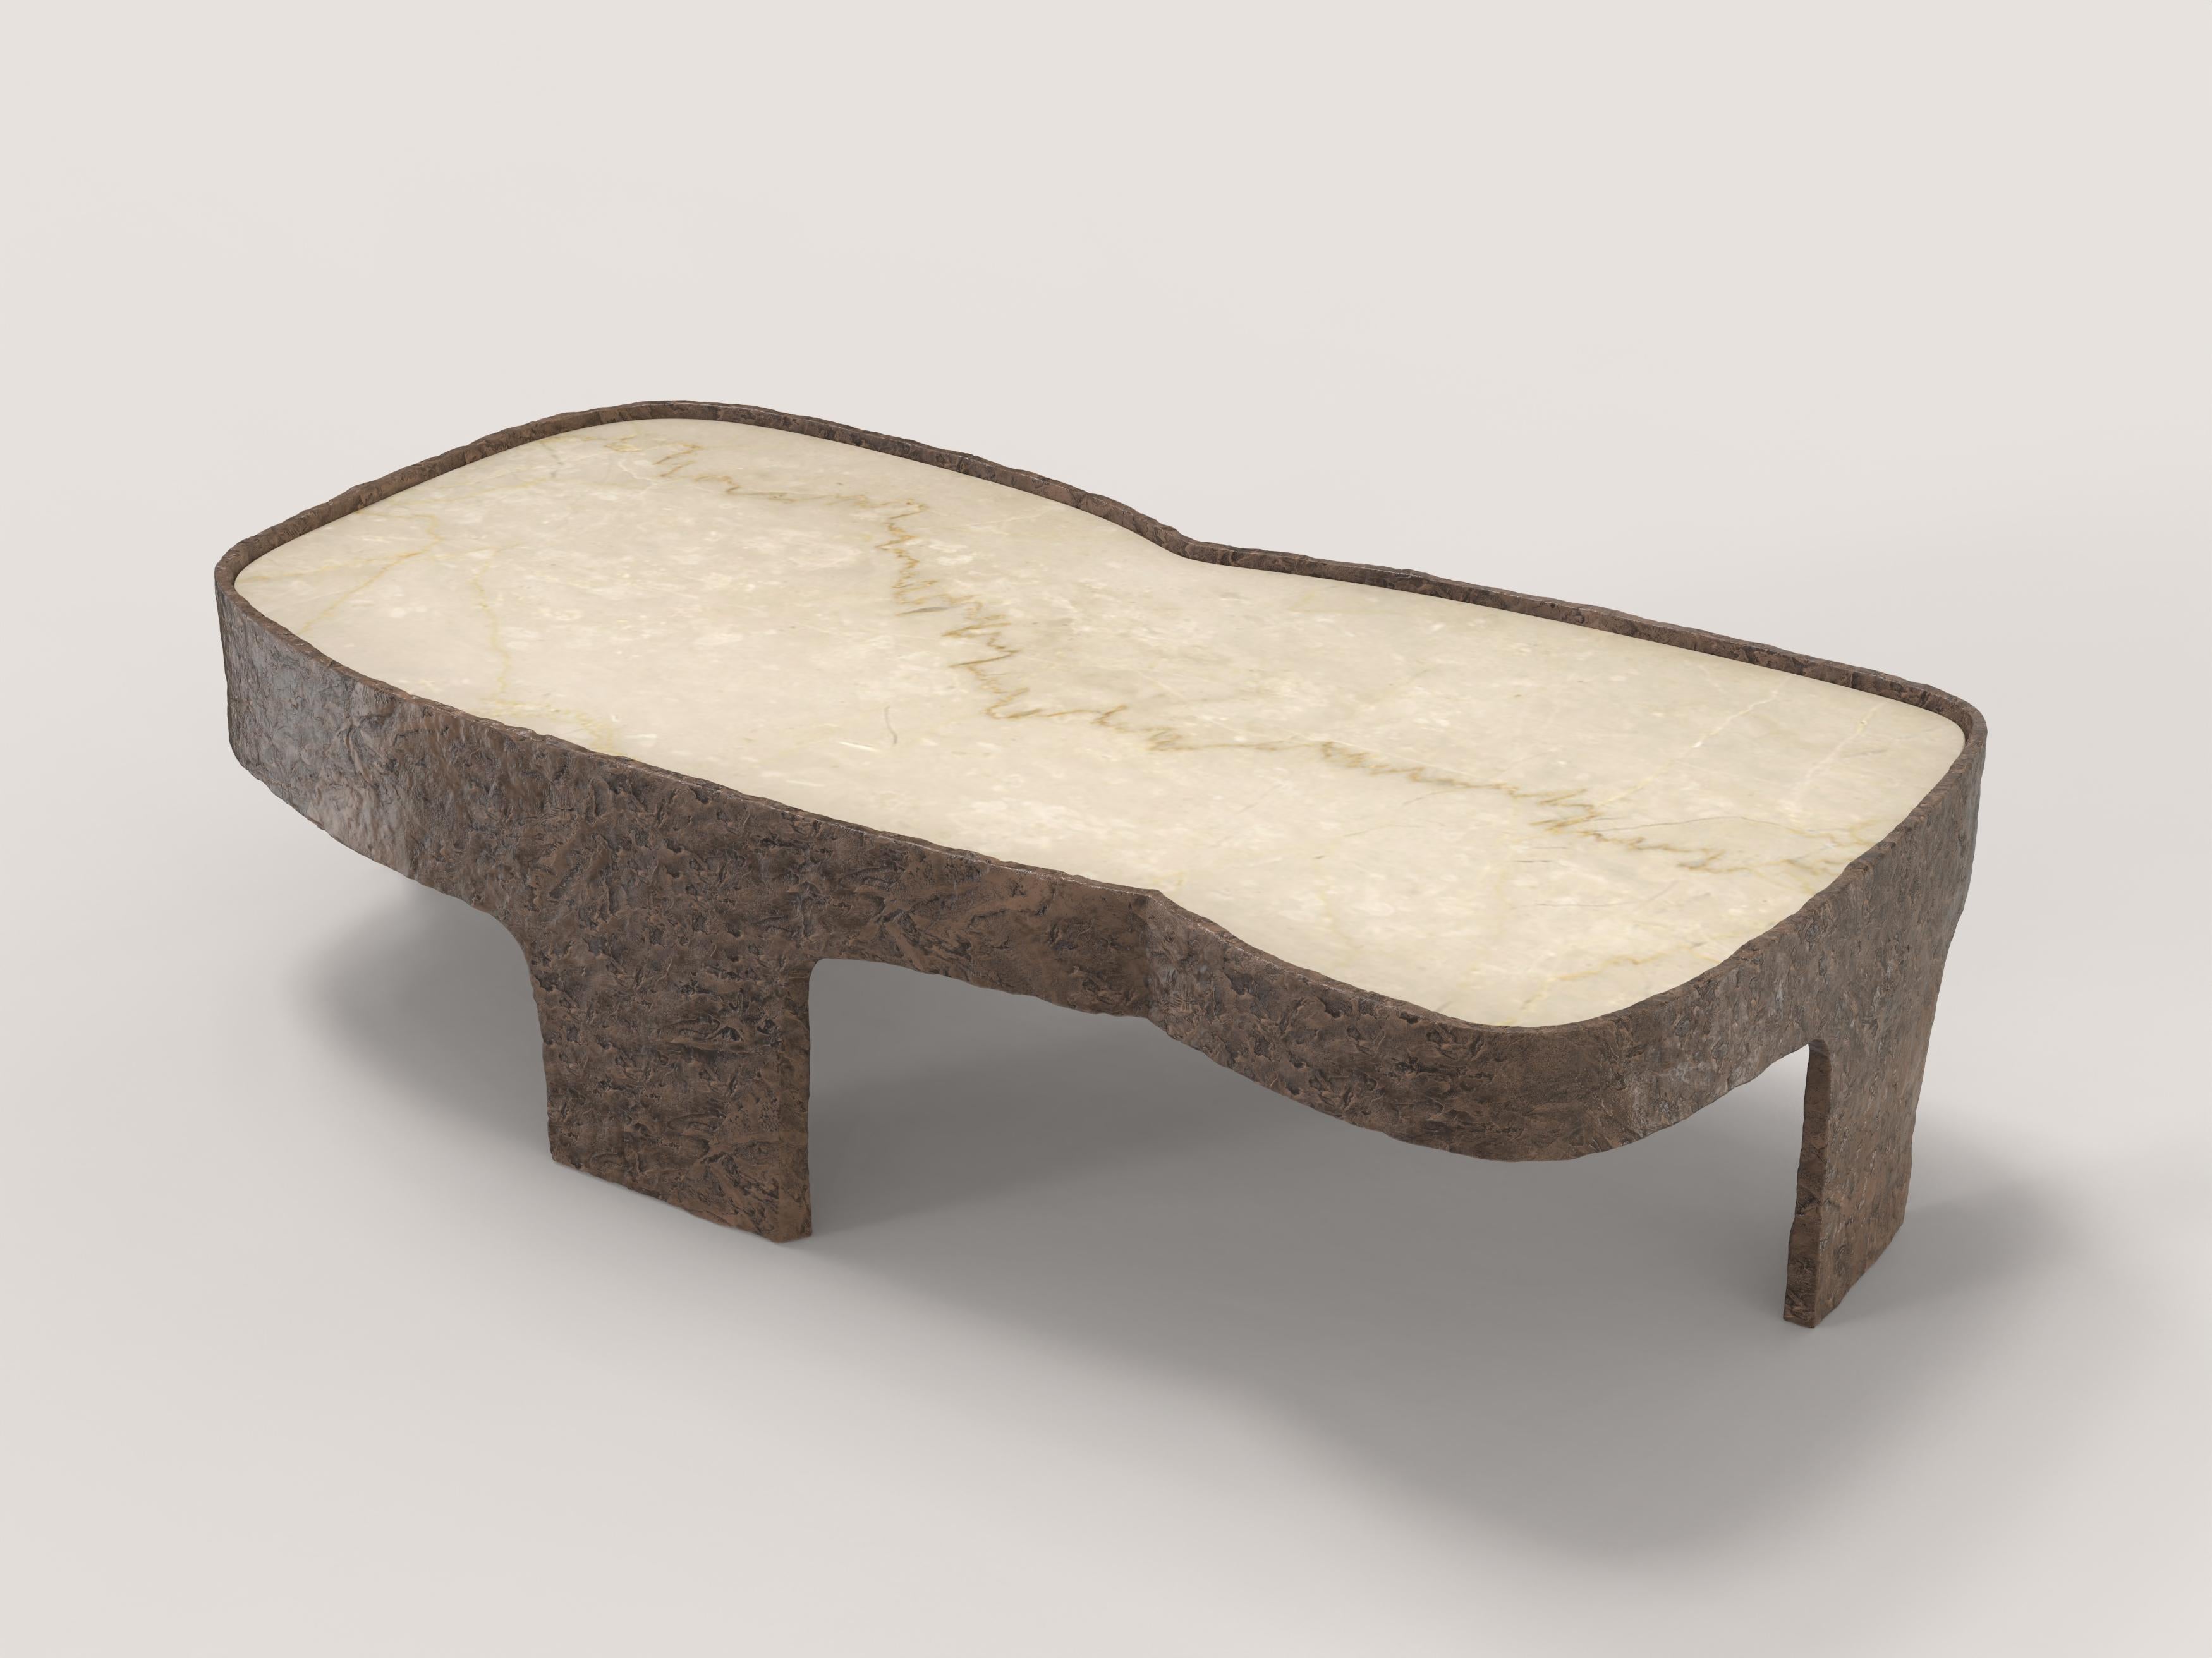 Contemporary Limited Edition Marble Bronze Table, Sumatra V3 by Edizione Limitata For Sale